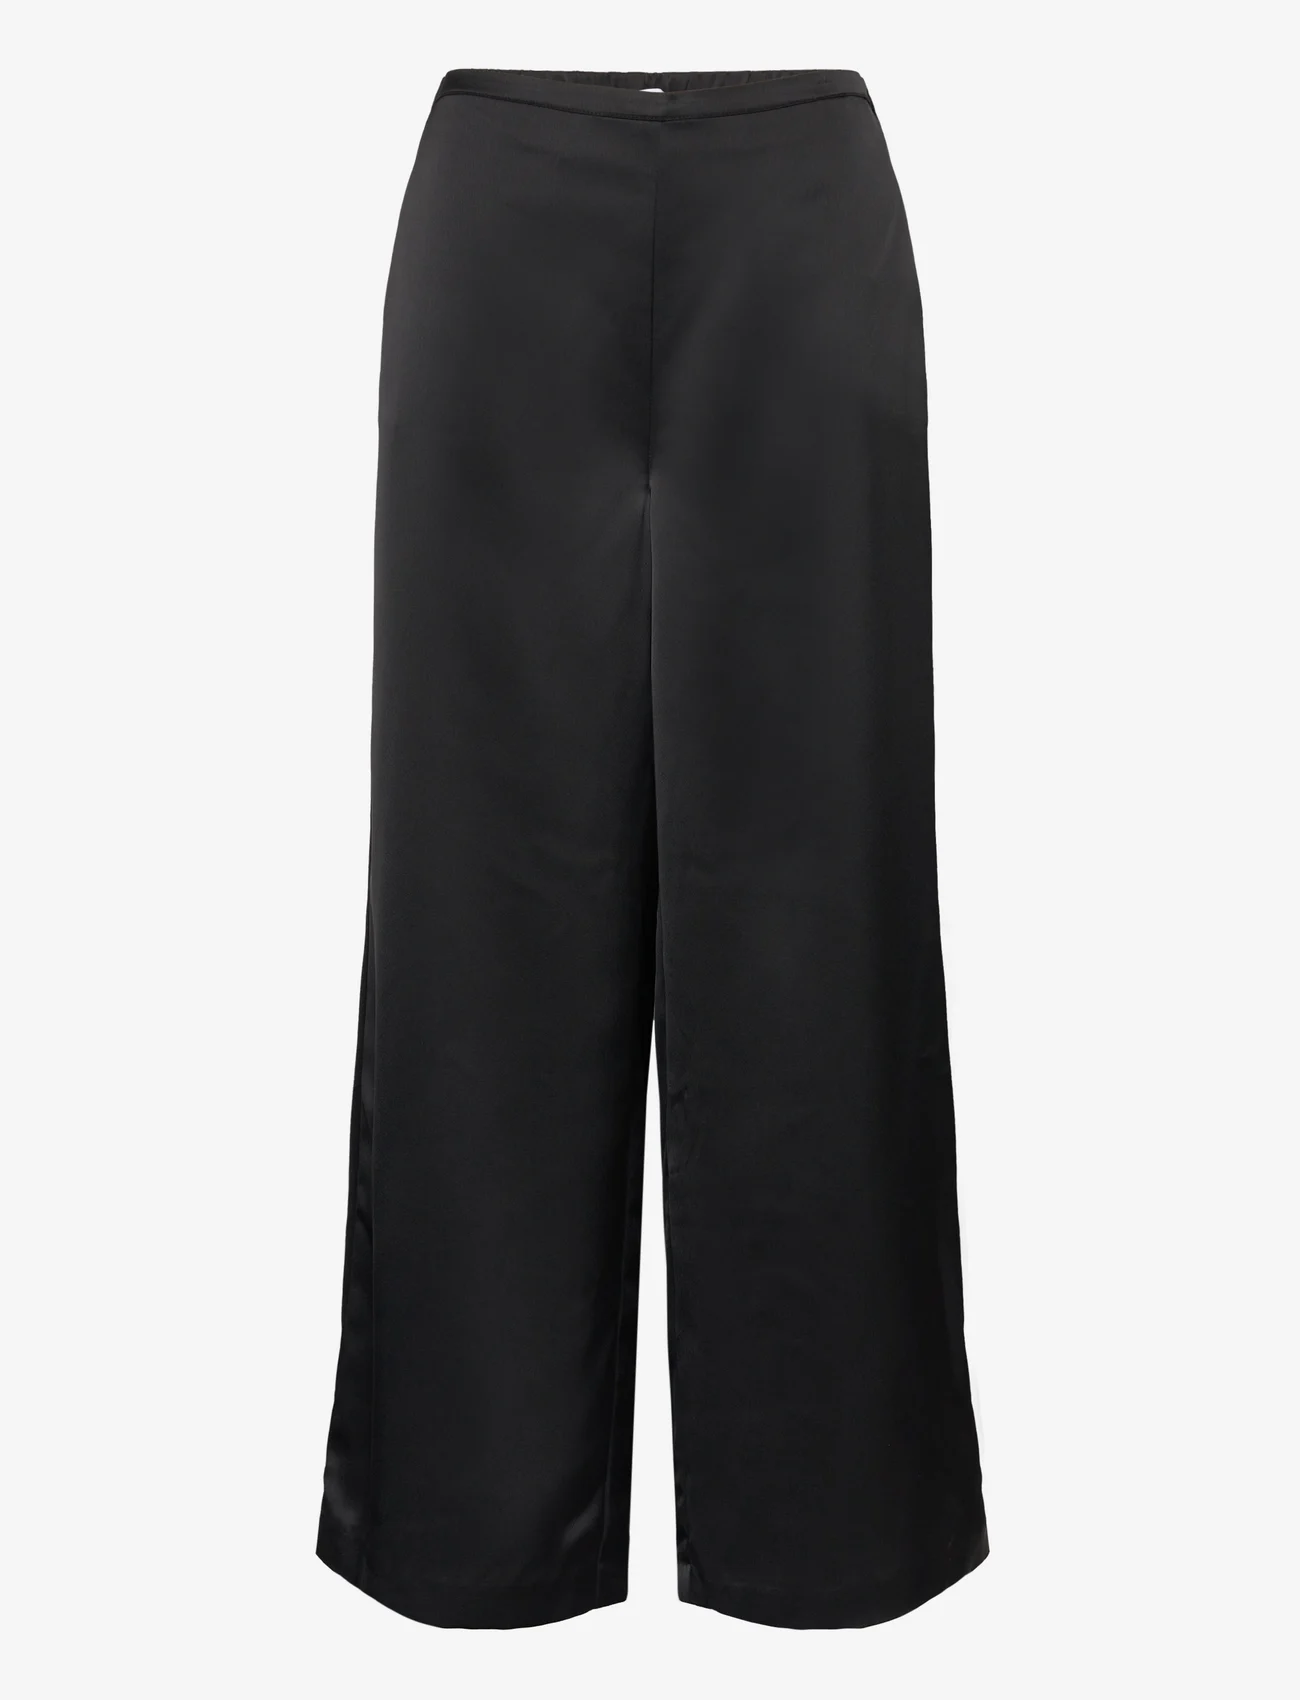 Selected Femme - SLFTASJA HW EXTRA WIDE PANT - bukser med brede ben - black - 0